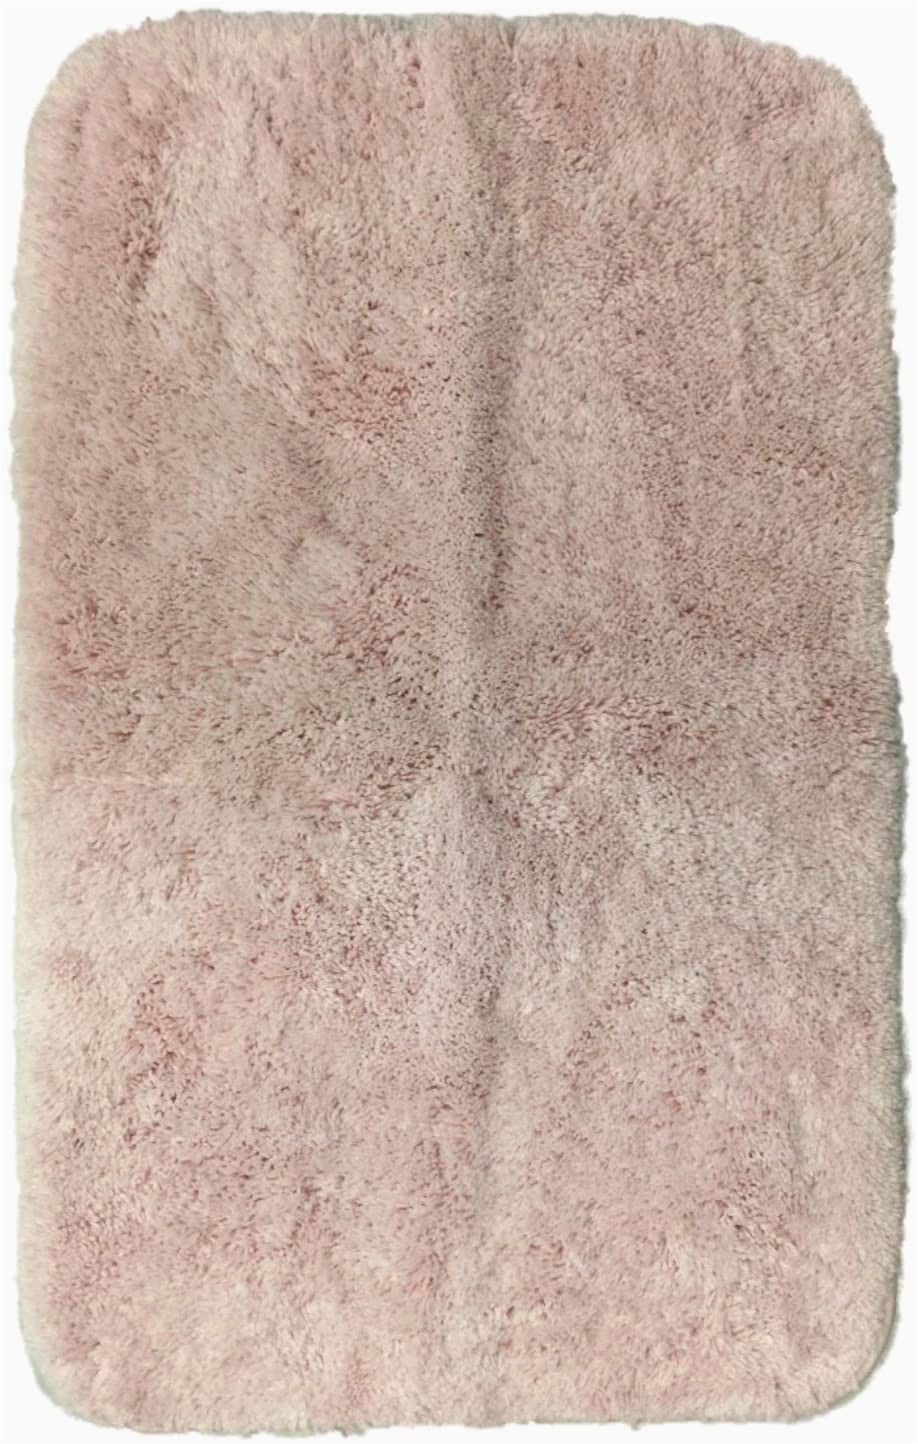 Plush Pink Bathroom Rugs Amazon sonoma Ultimate Light Blush Pink Skid Resistant